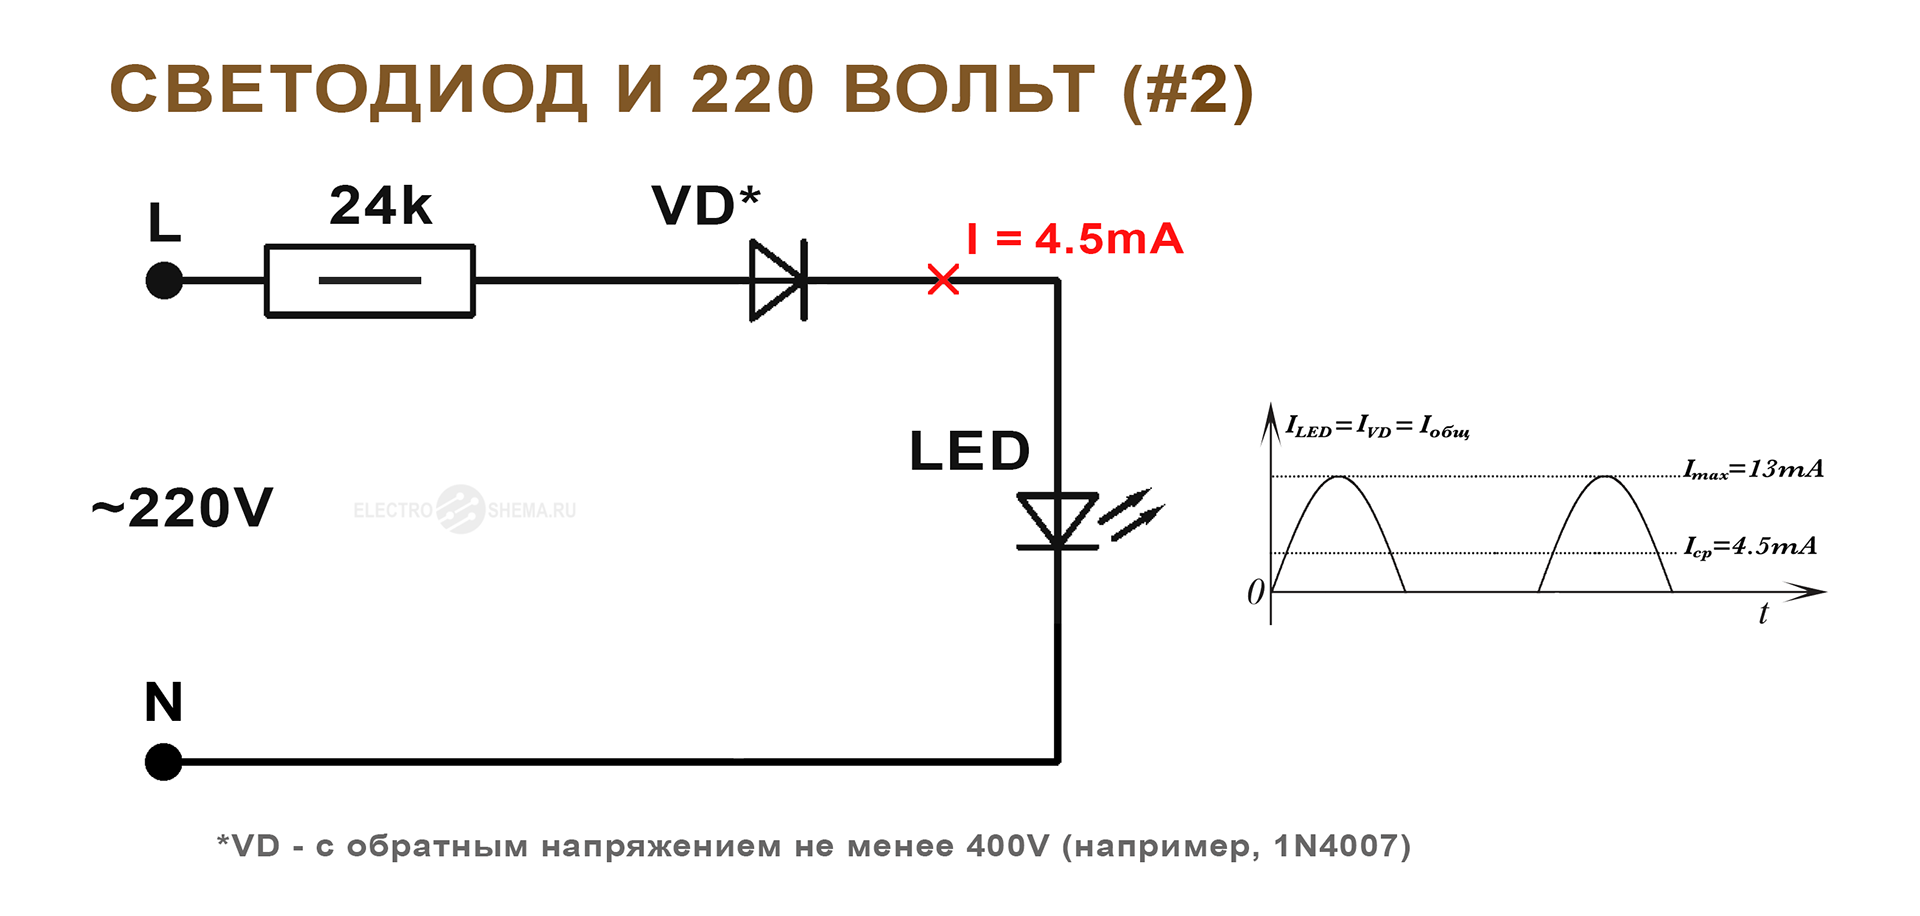 Подключение диода на 12 в. Схема включения светодиода в сеть 220. Включение светодиода в сеть 220 вольт схема. Светодиод к сети 220 вольт схема. Светодиод индикатор 220 вольт схема.